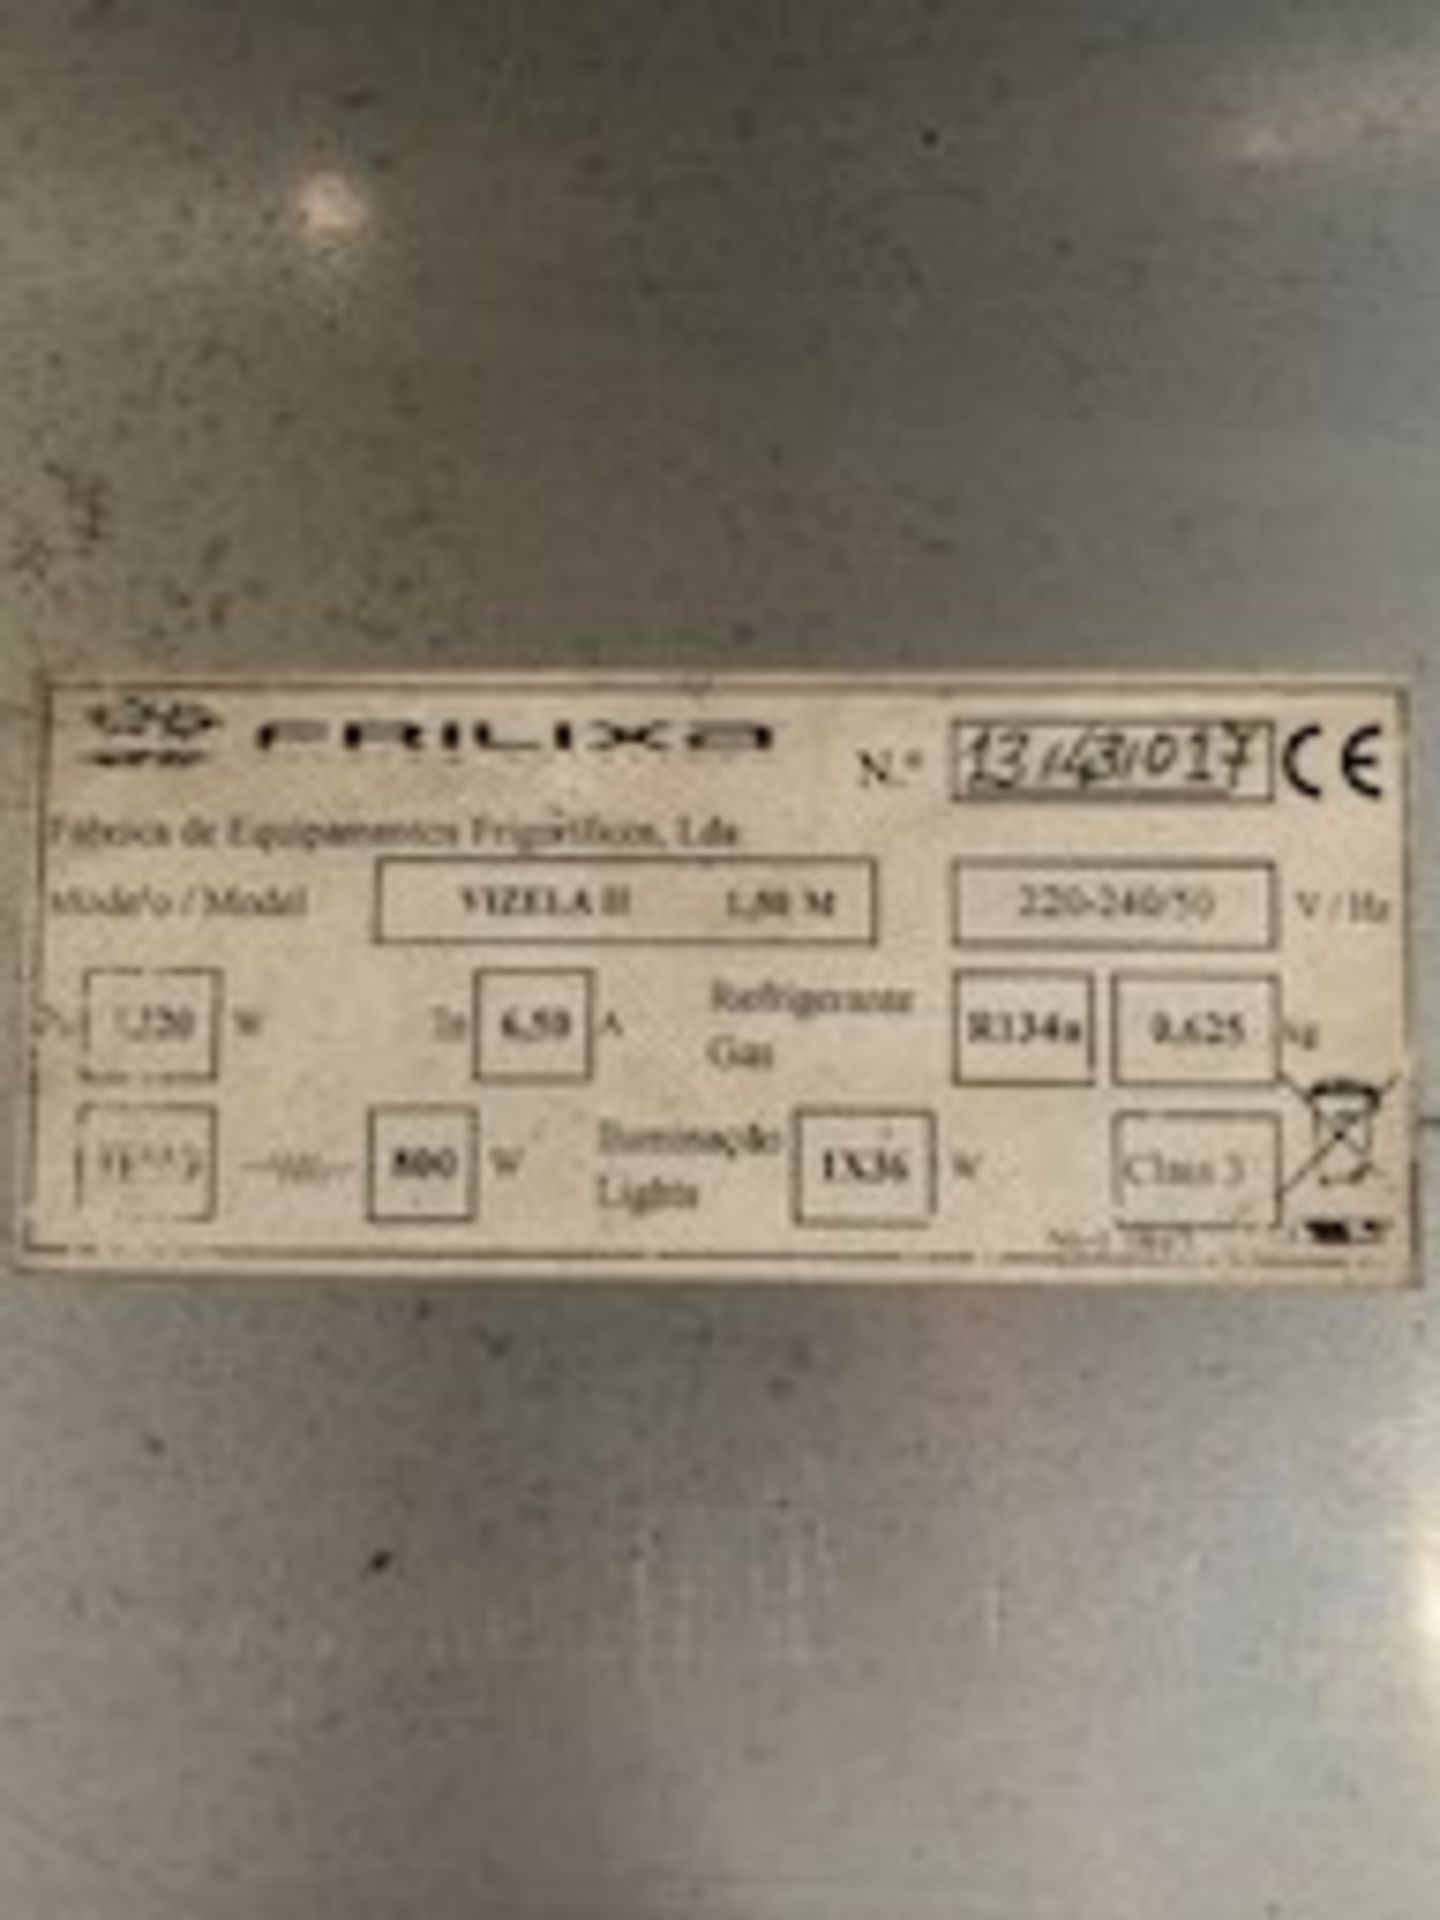 Frilixa Vizela II Five Deck Stainless Steel Display Chiller - Image 5 of 5